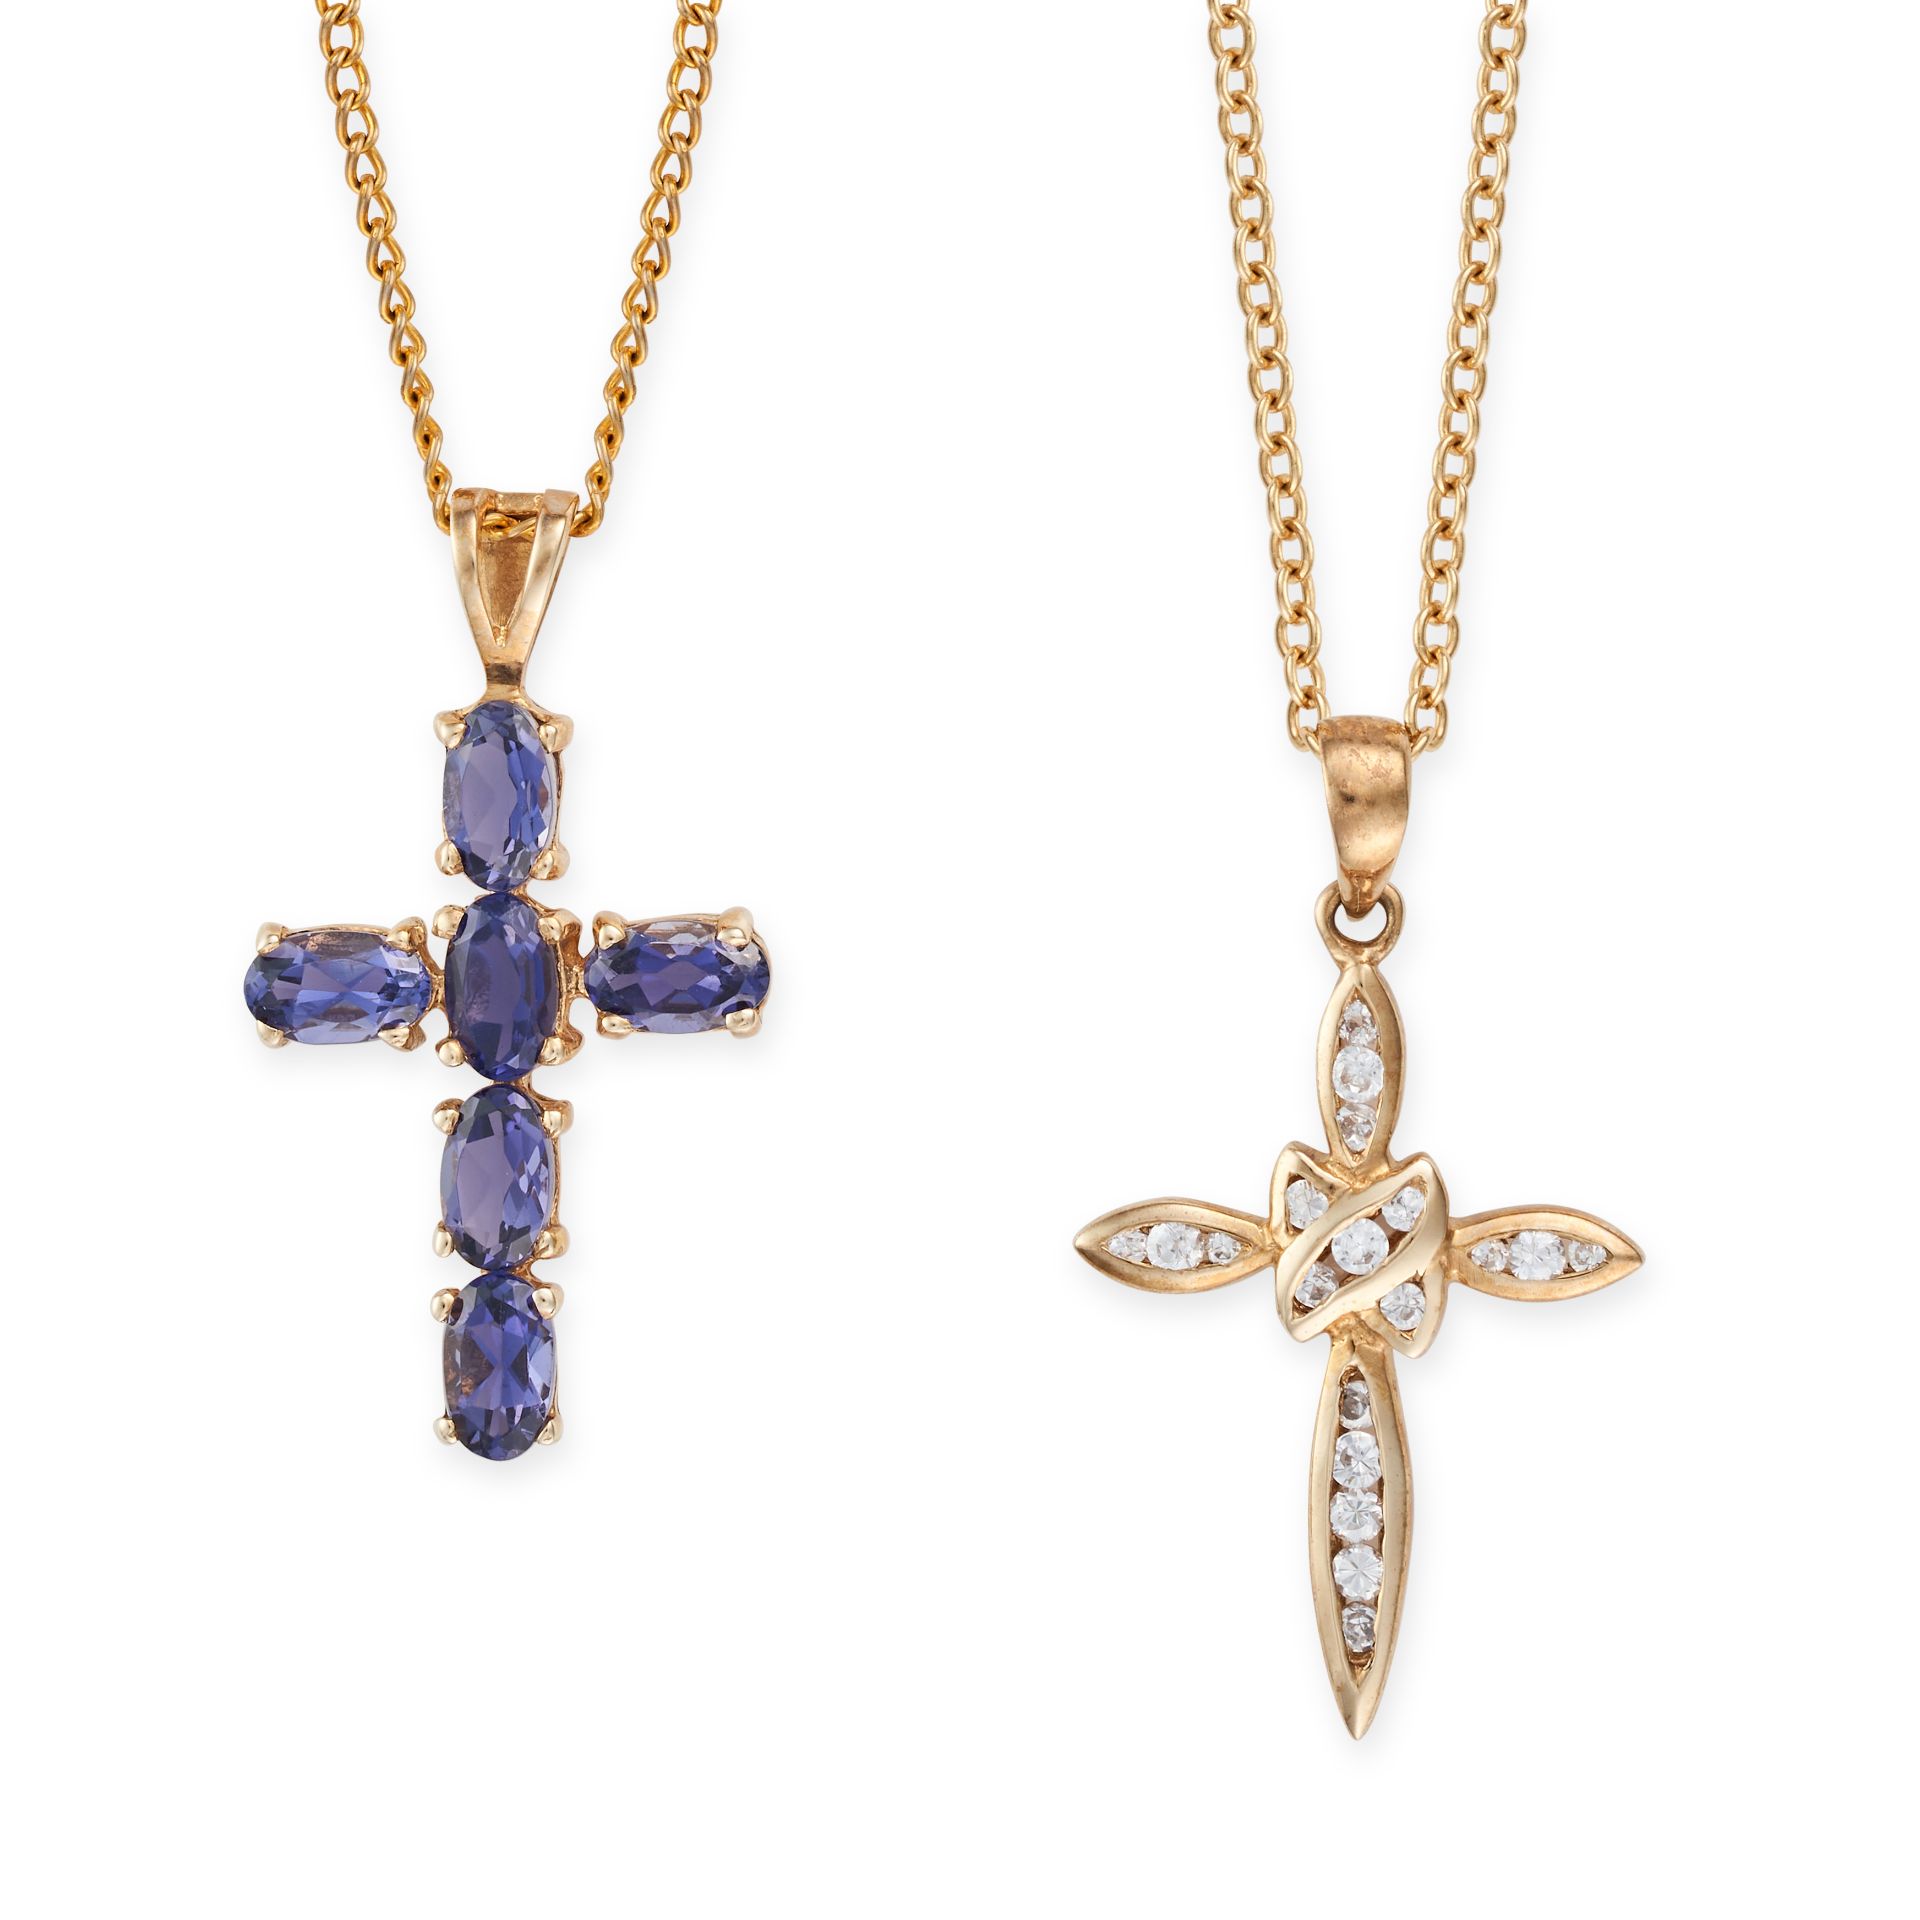 NO RESERVE - A COLLECTION OF NECKLACES comprising a sapphire cross pendant necklace, pendant stam...